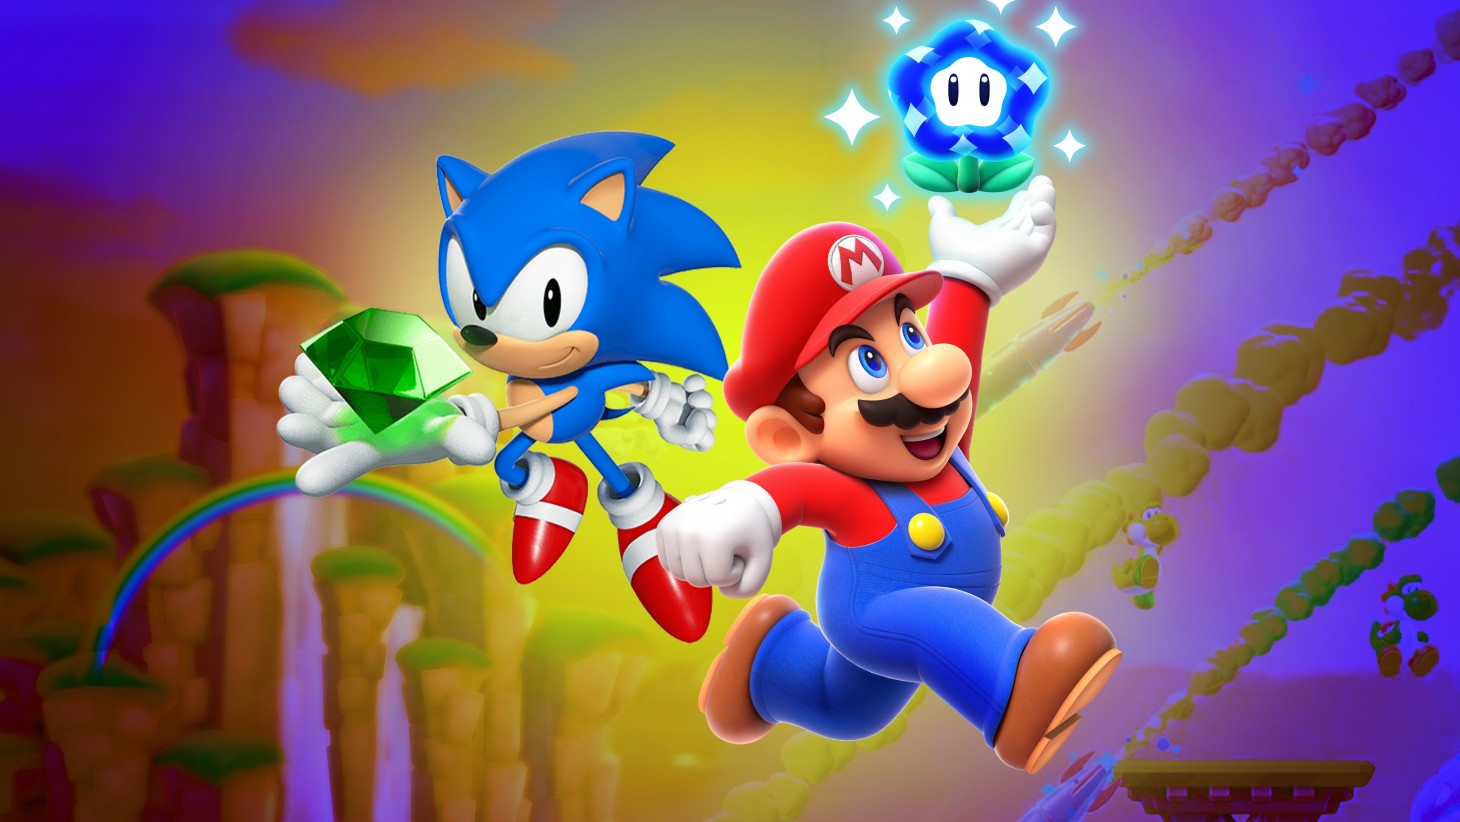 Does Super Mario Bros. Wonder Have Online Multiplayer?